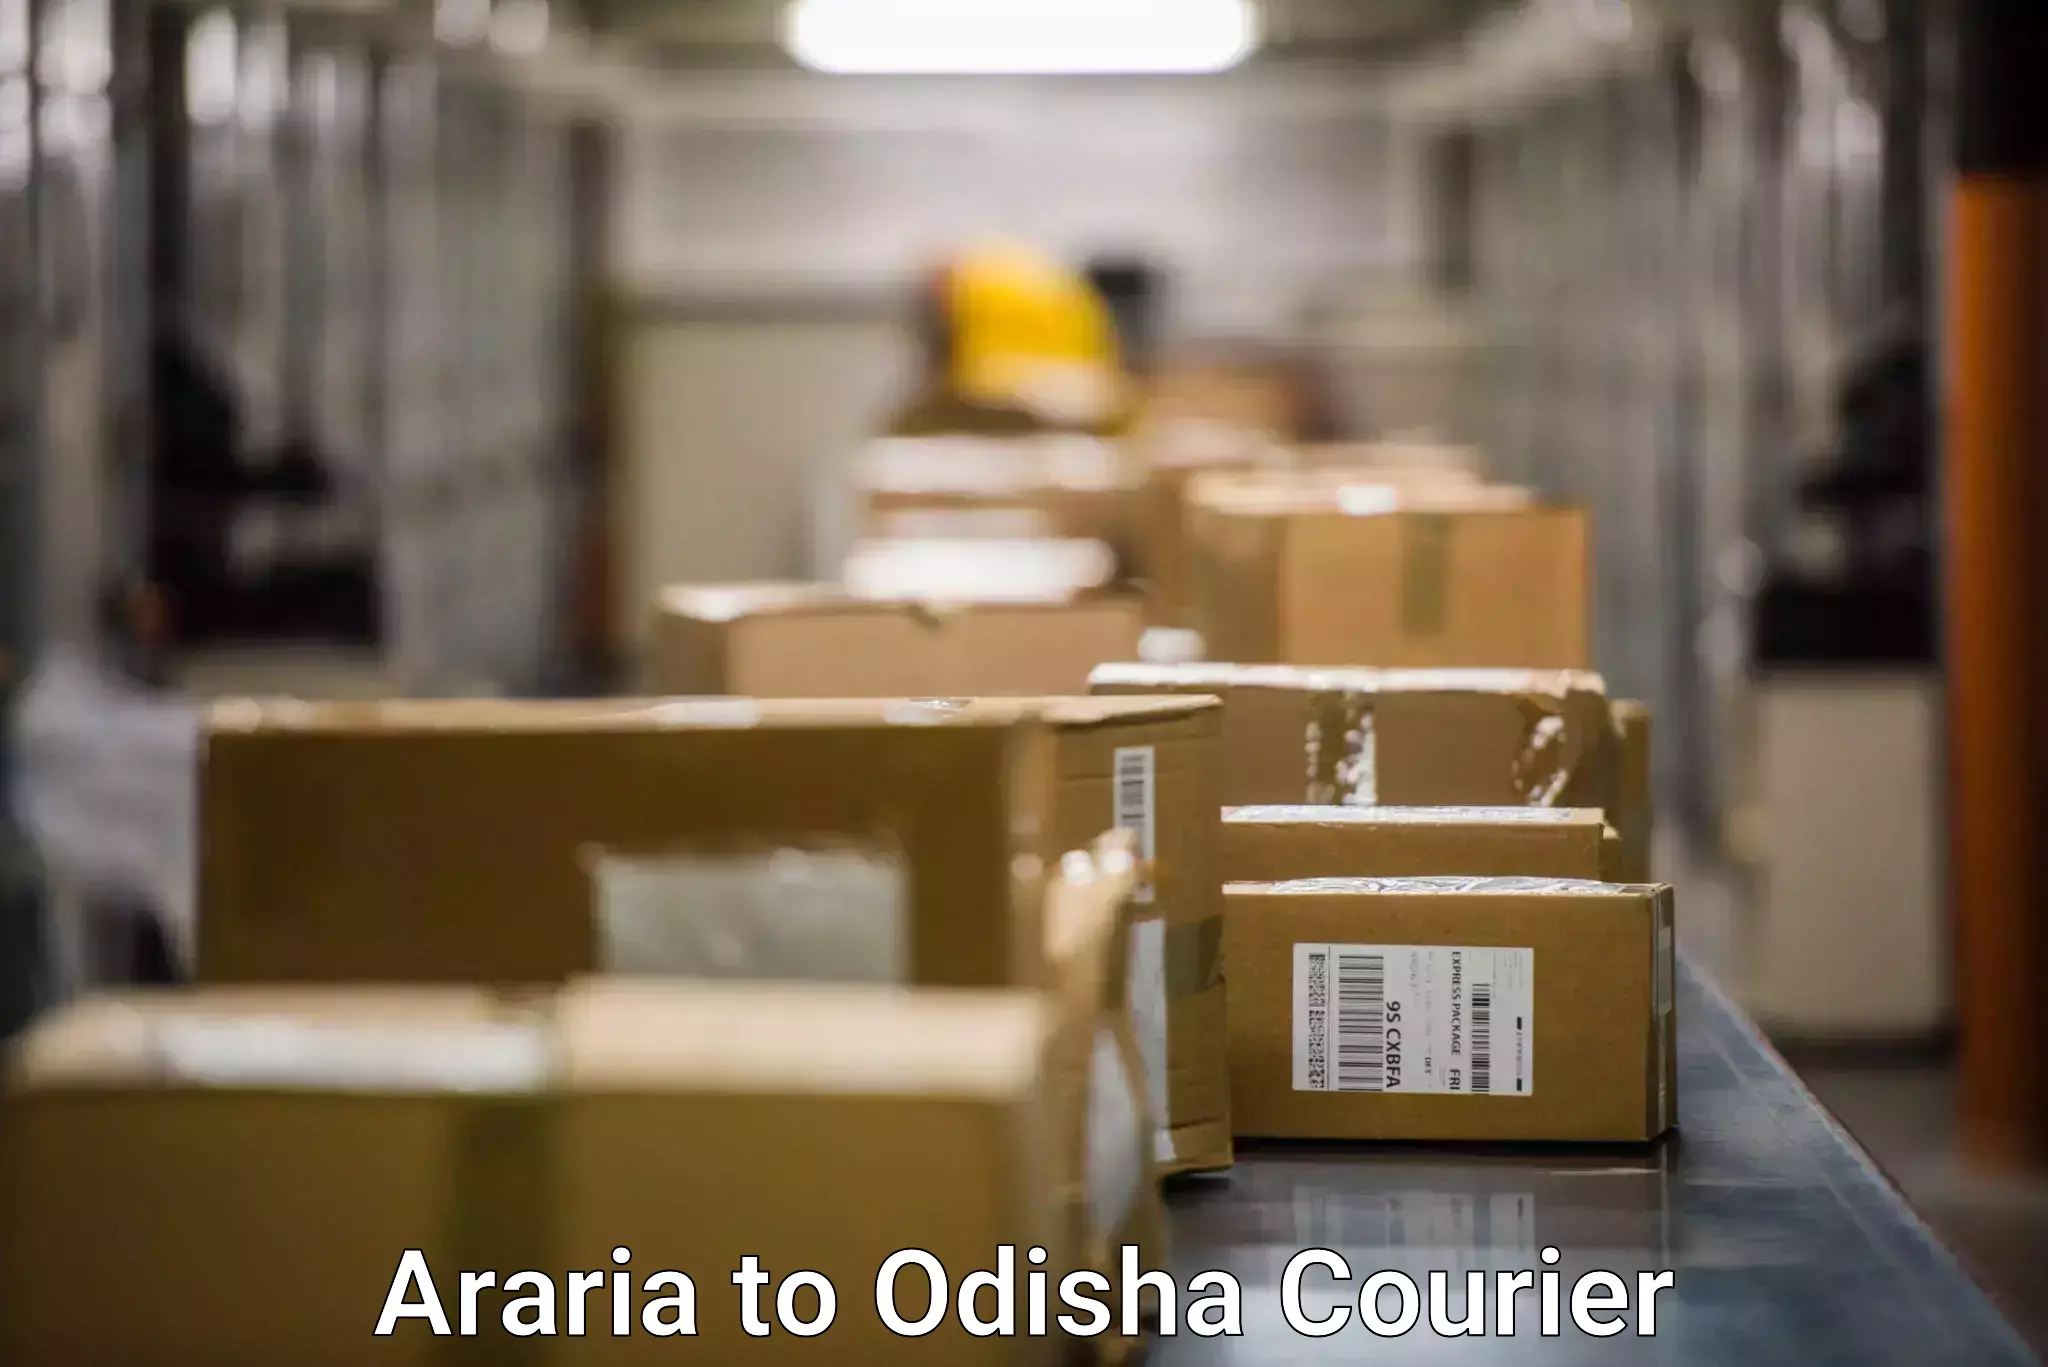 Courier service booking Araria to Jeypore